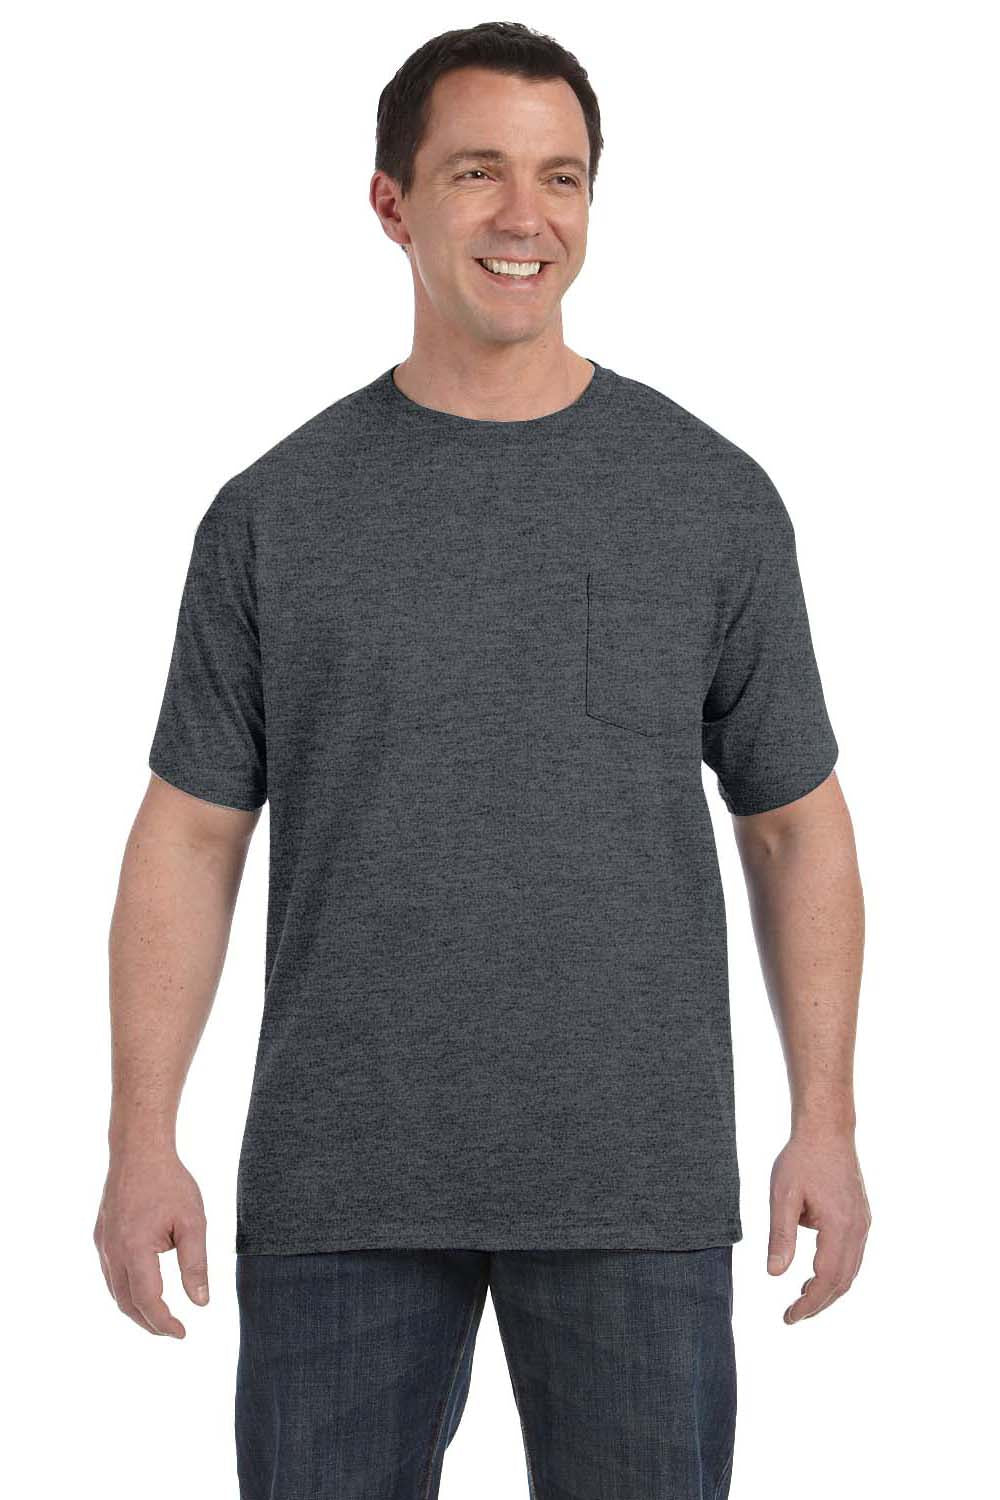 Hanes H5590 Mens ComfortSoft Short Sleeve Crewneck T-Shirt w/ Pocket Heather Charcoal Grey Front